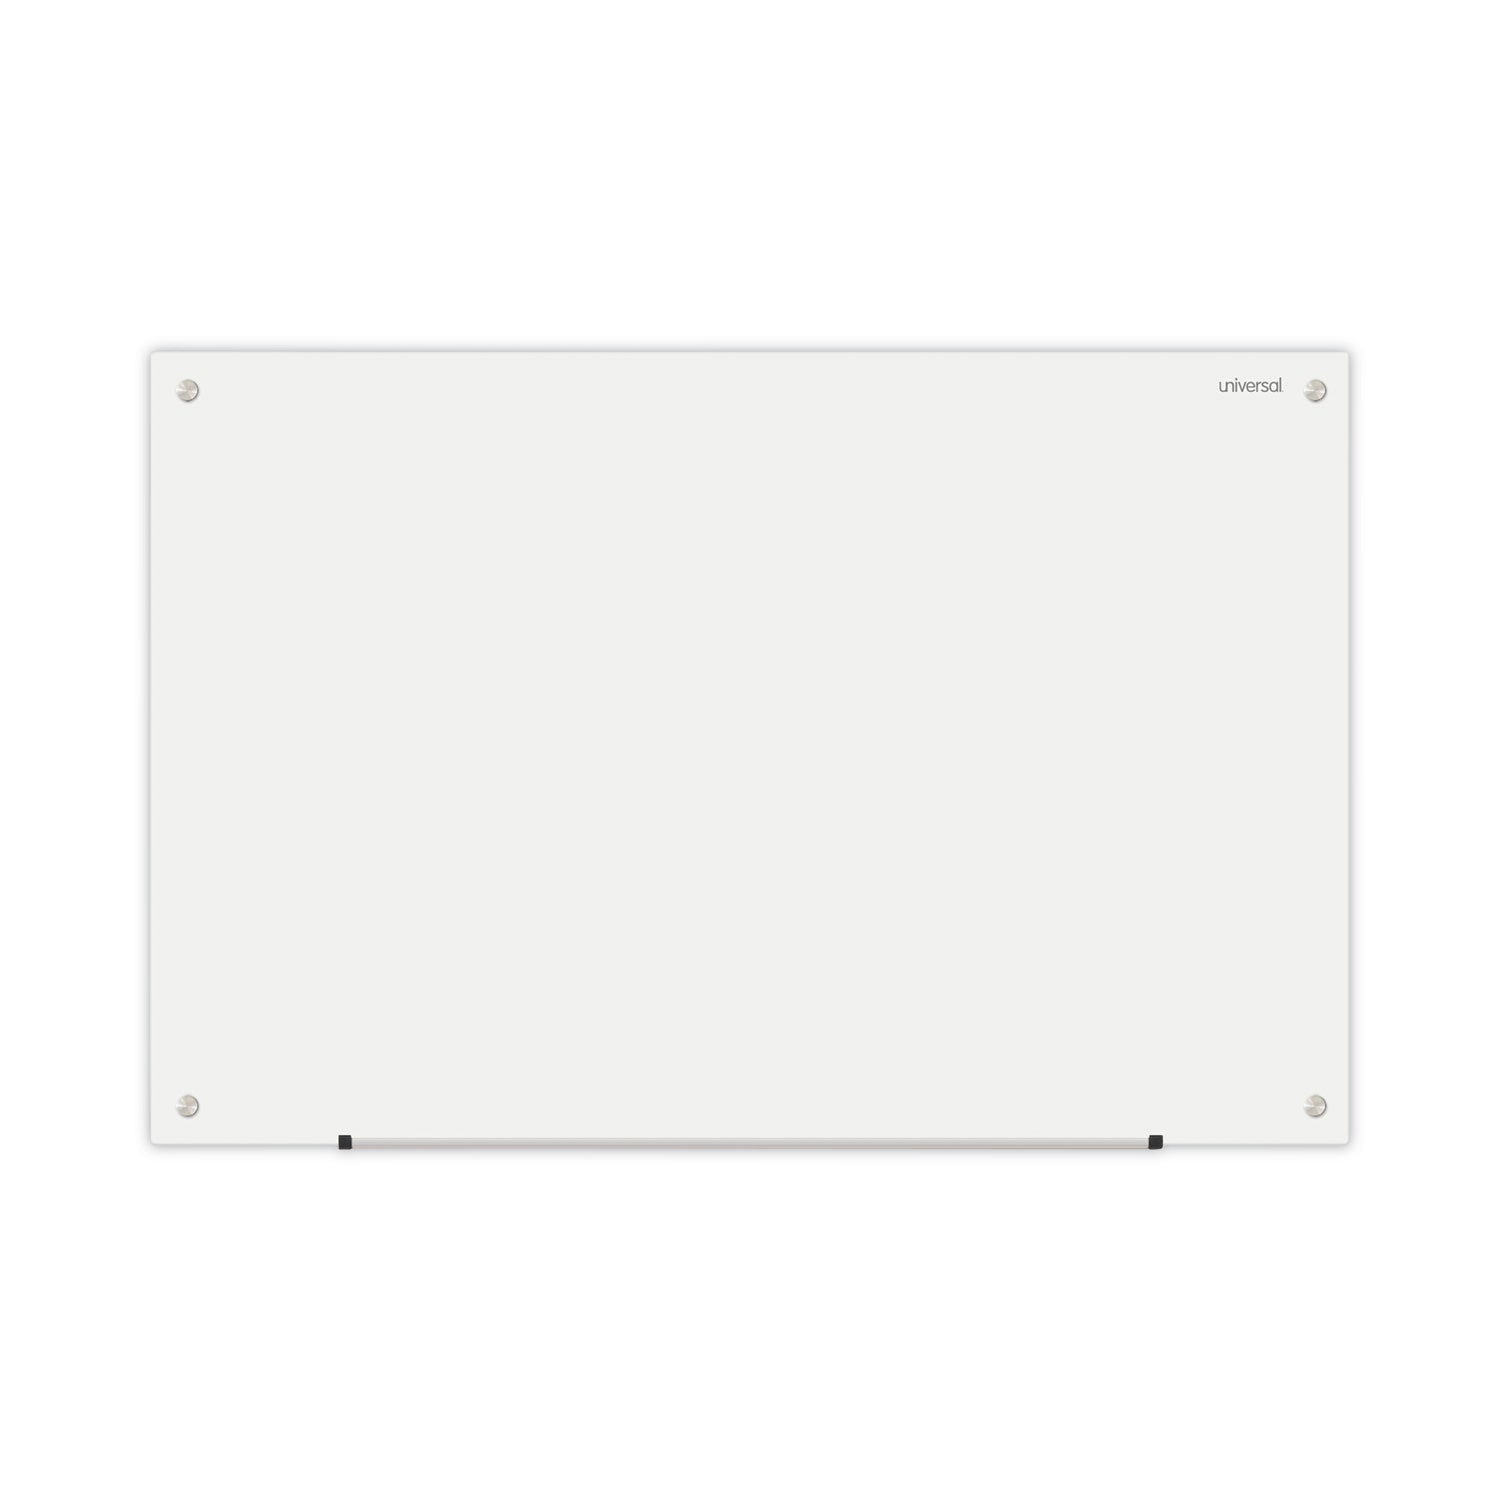 frameless-glass-marker-board-36-x-24-white-surface_unv43232 - 1